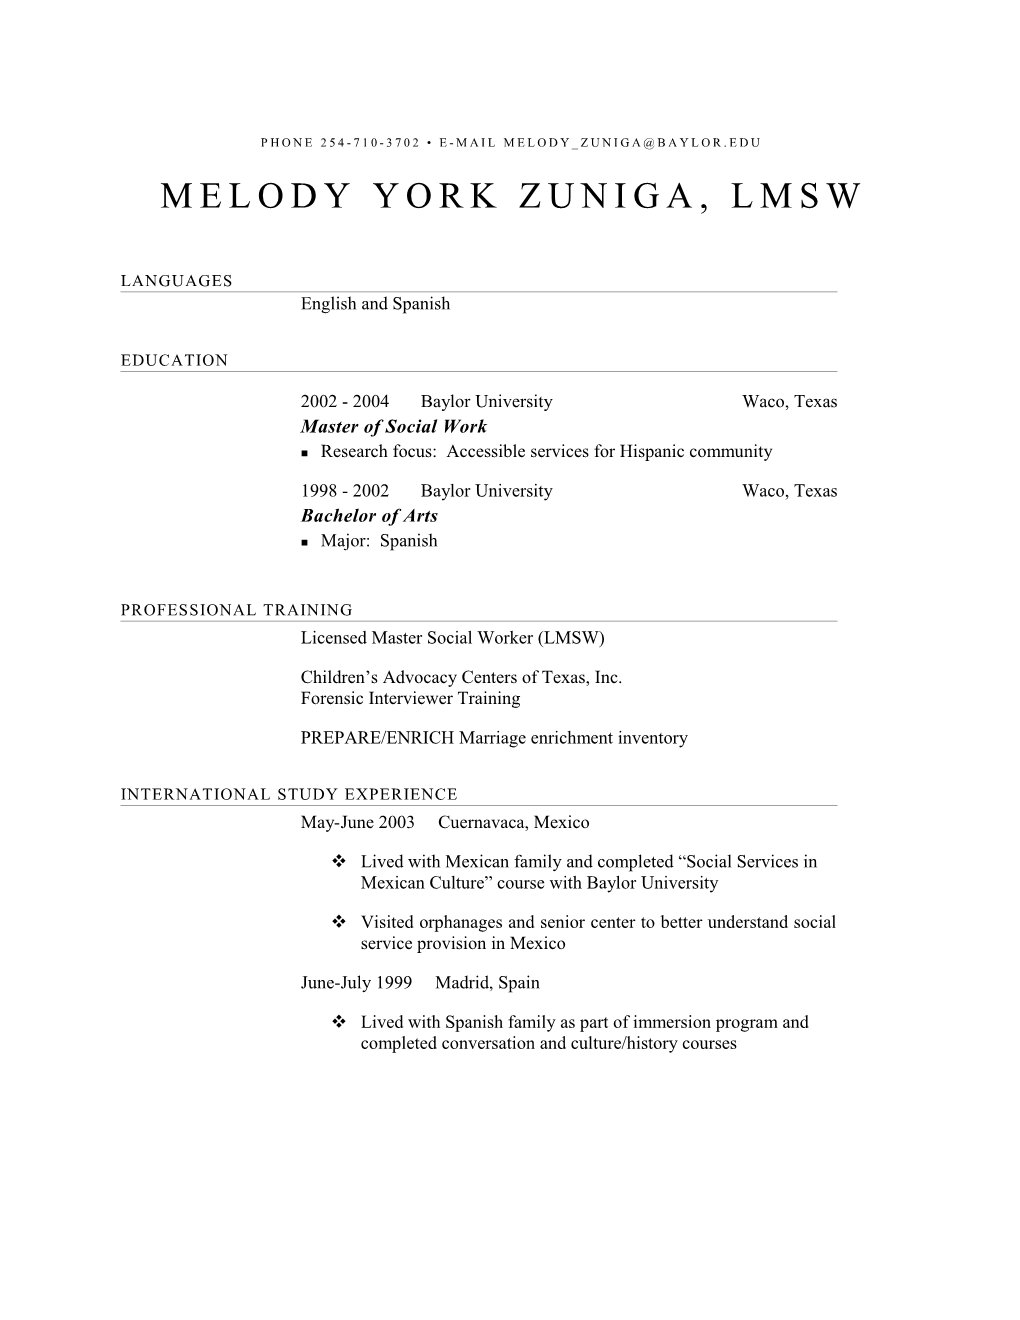 Melody York Zuniga, Lmsw